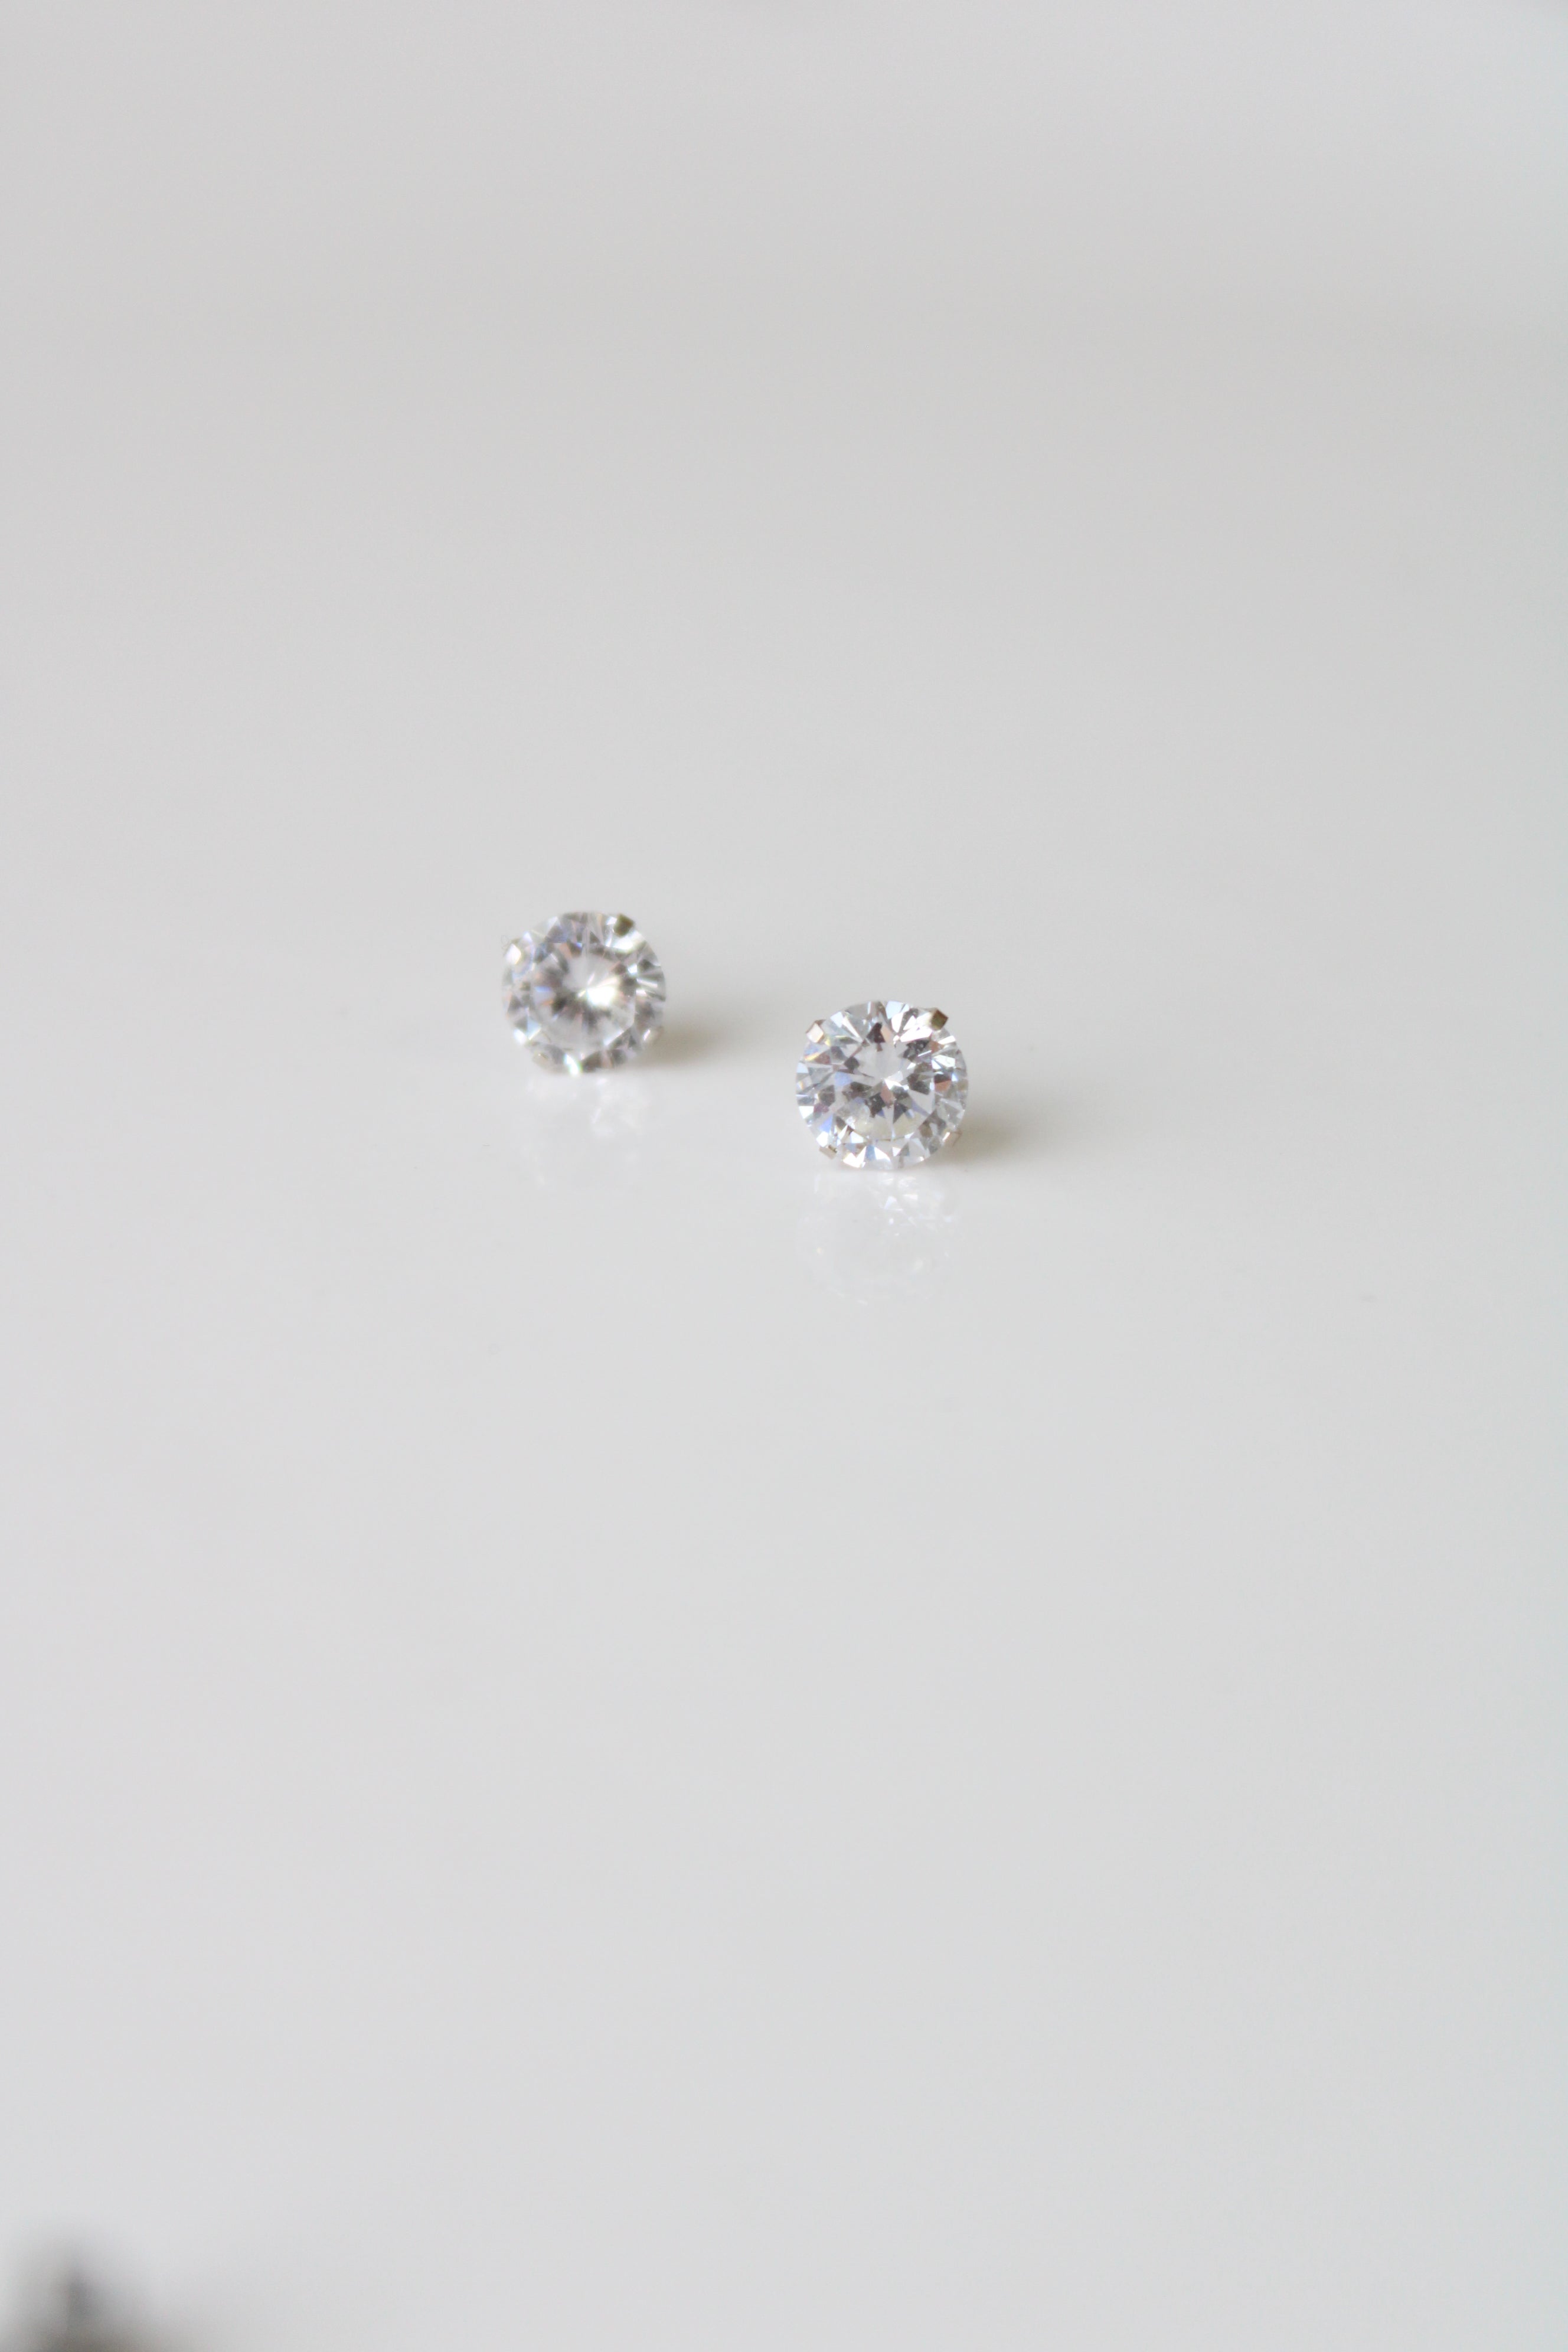 585 White Gold Stud Clear Stone Earrings